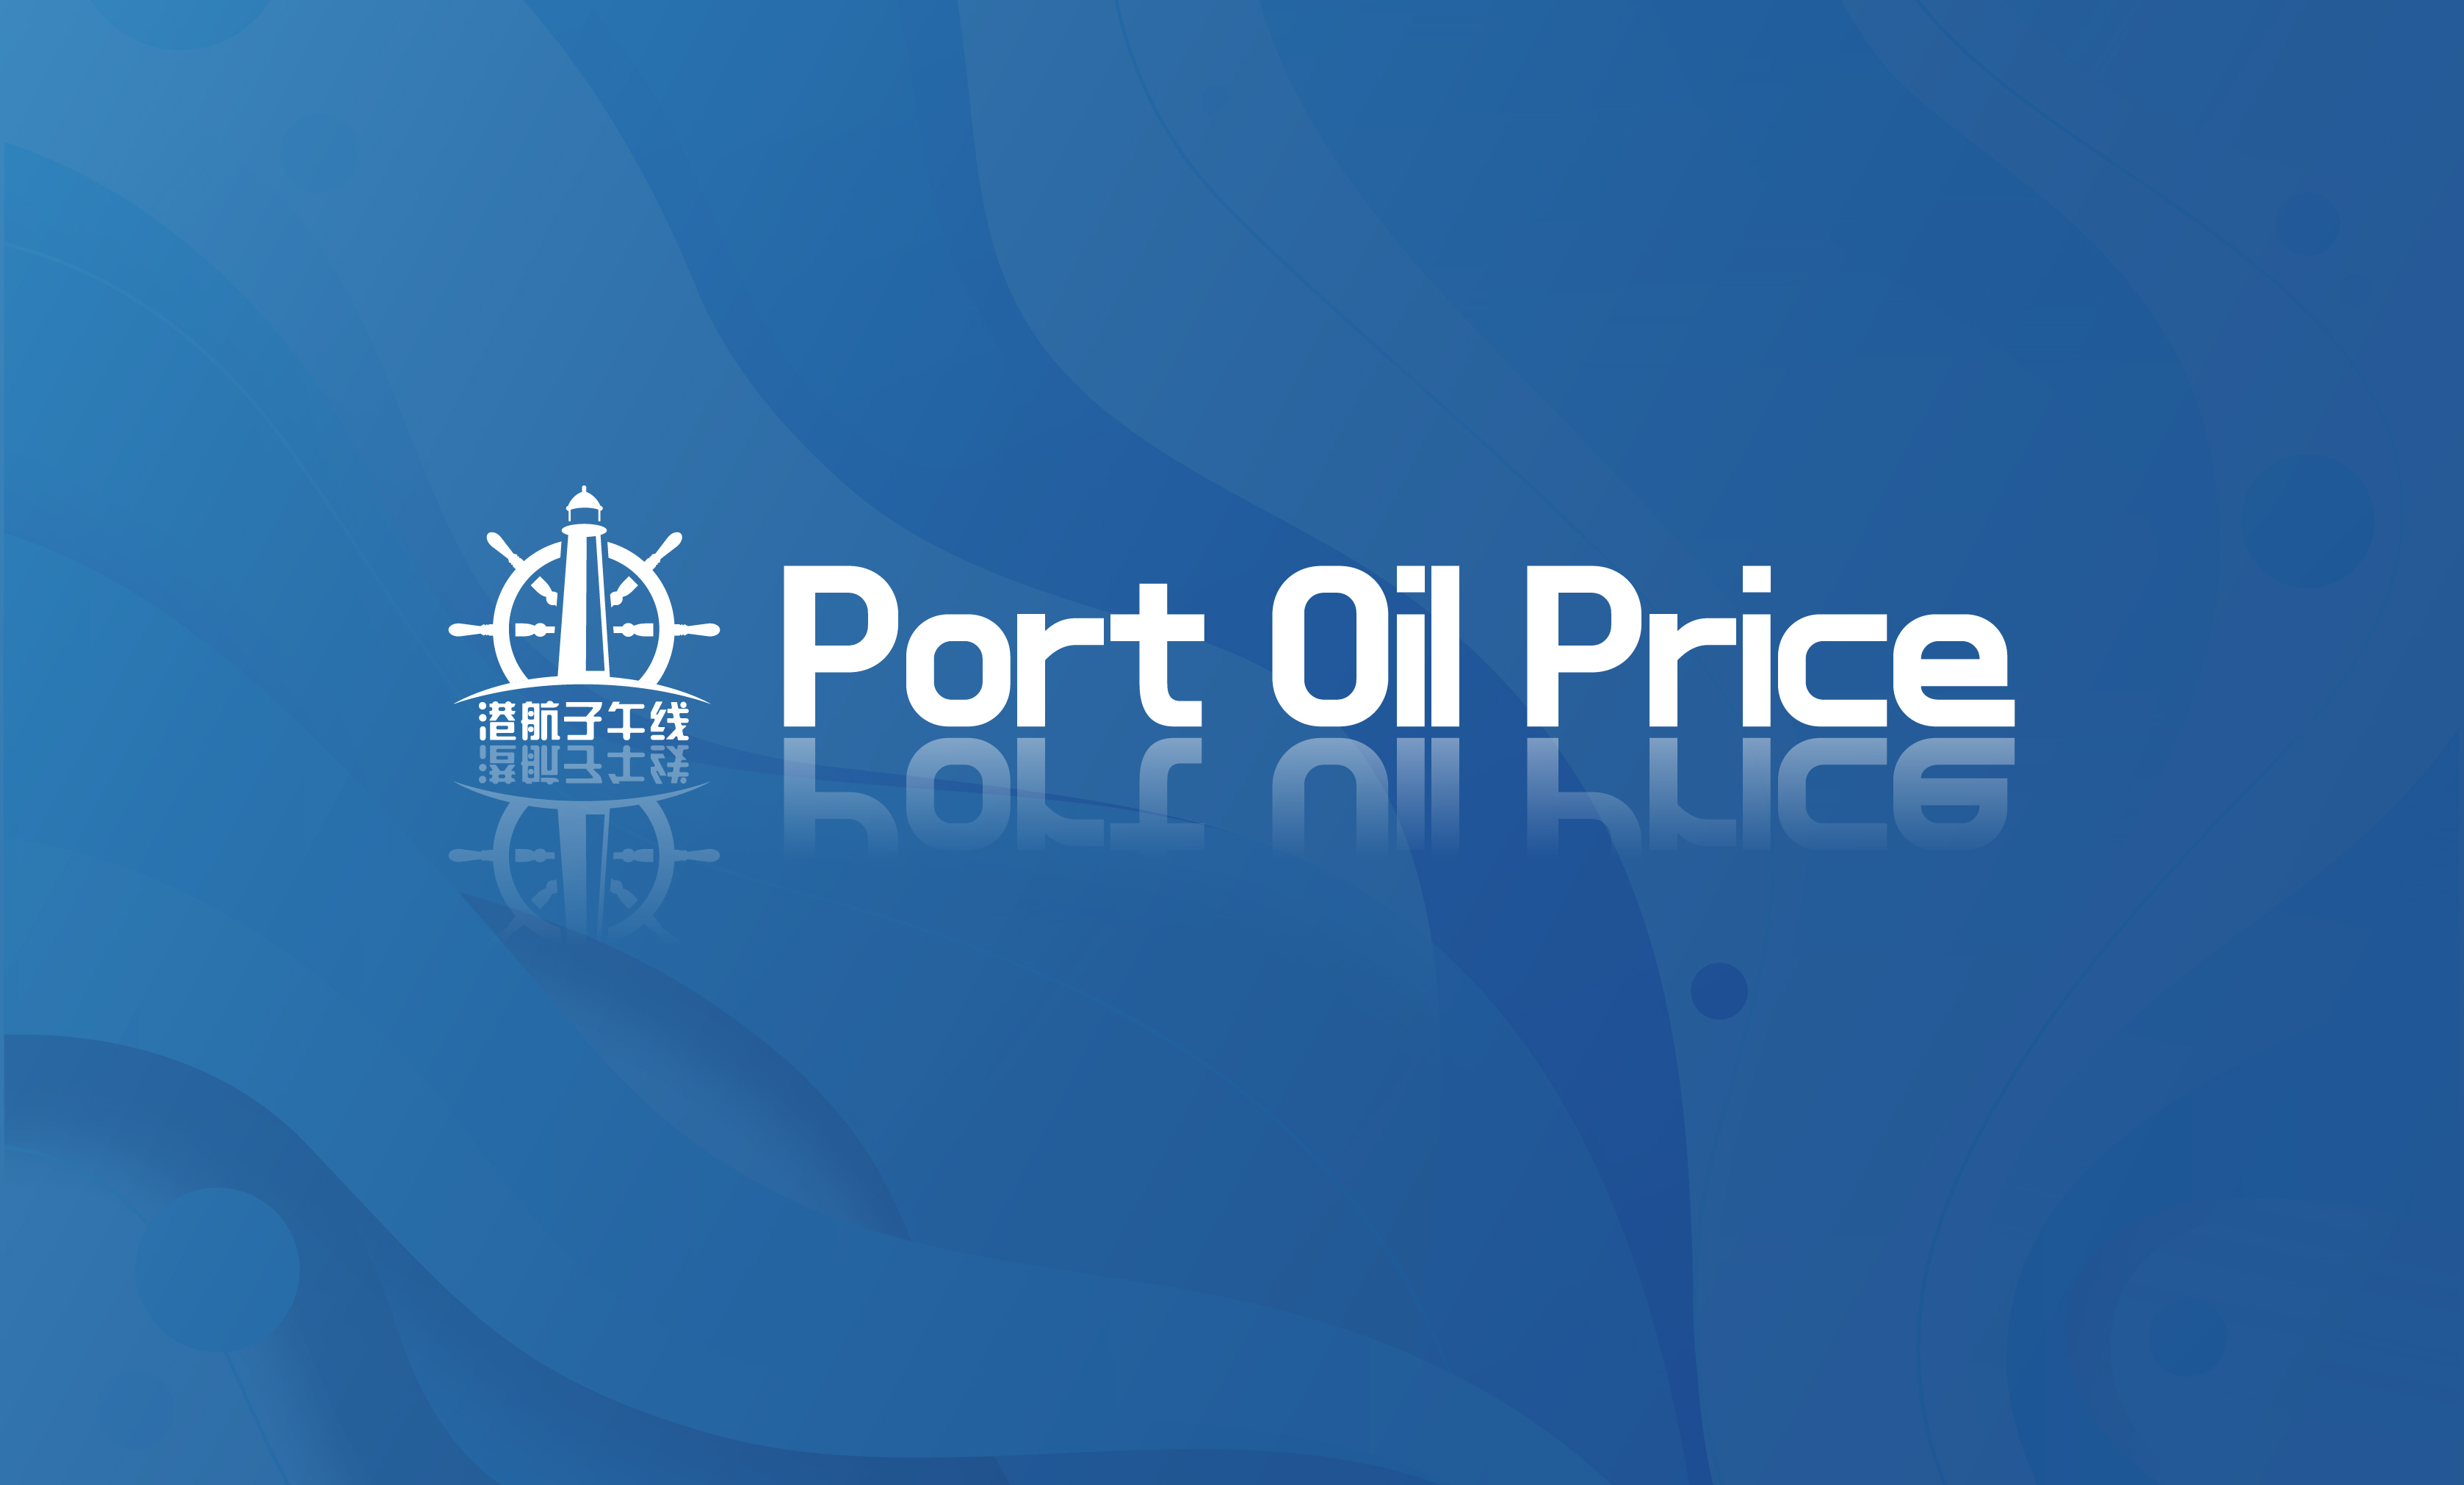 4/7 Oil Price for Global Popular Ports